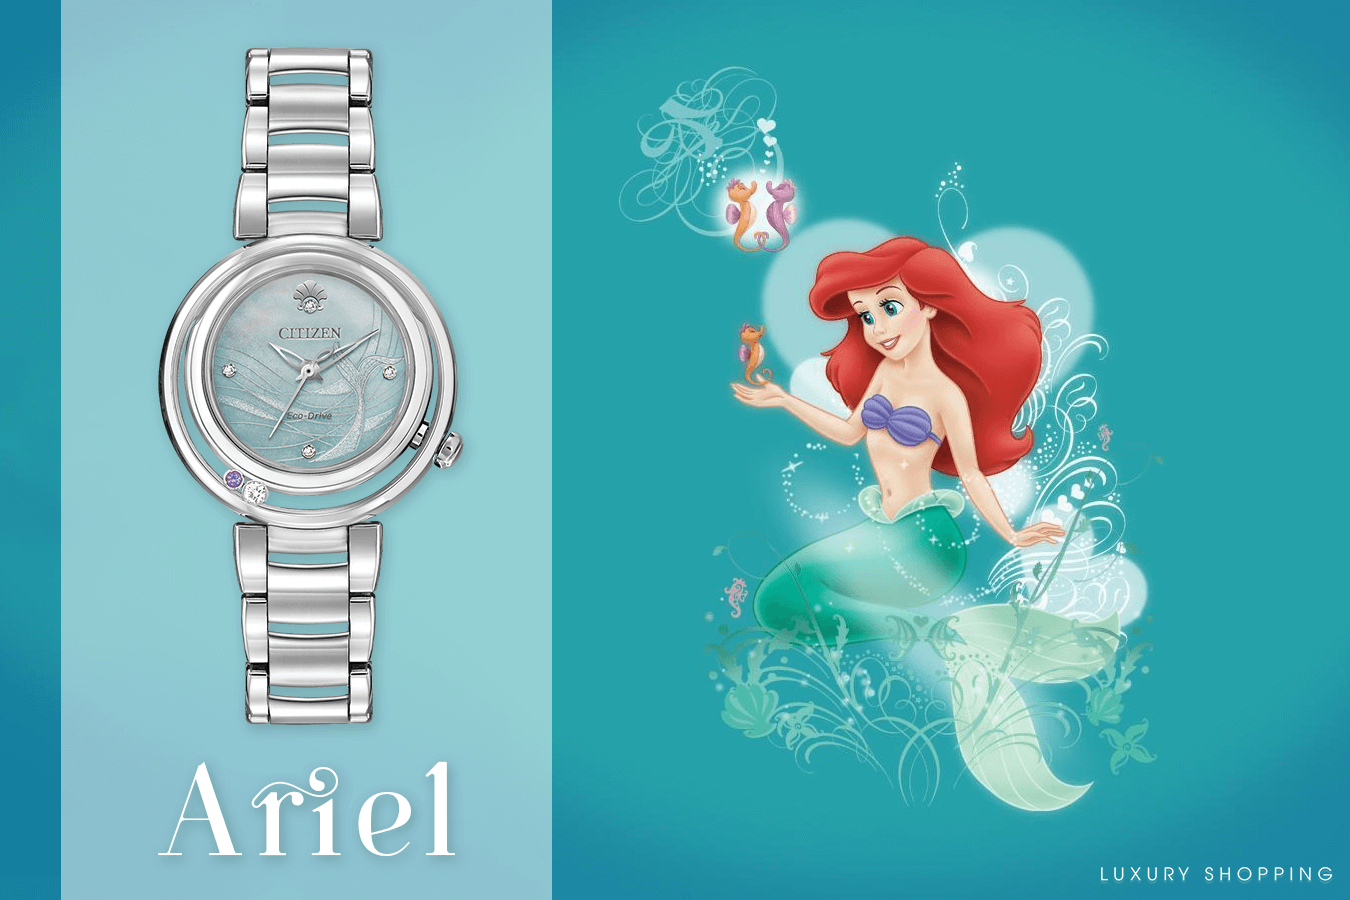 Citizen Disney Princess Diamond - Ariel (The Little Mermaid)